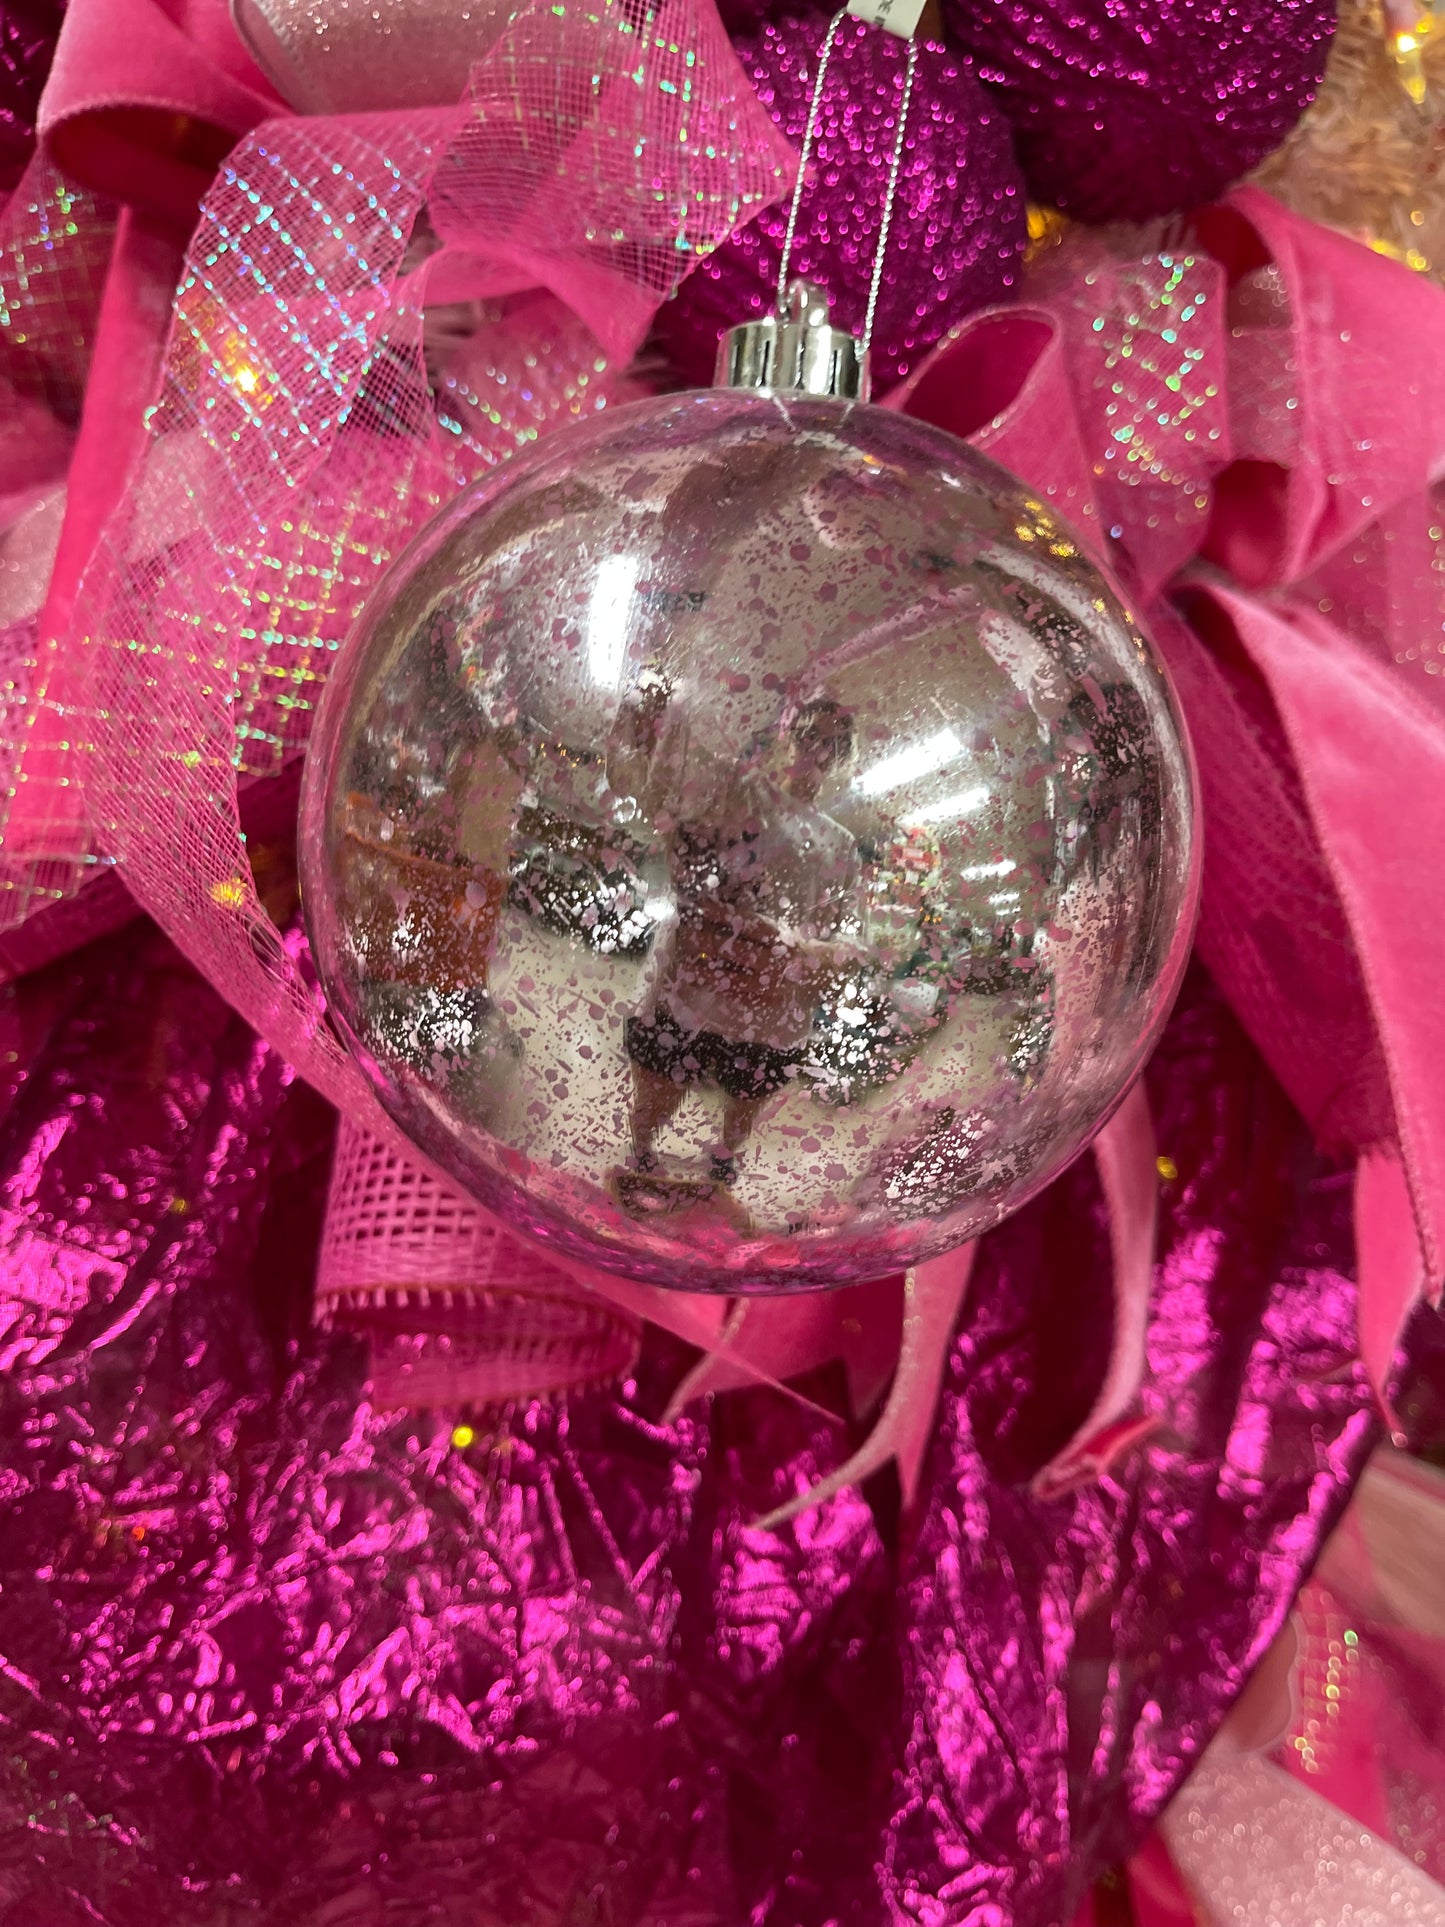 5.5 Inch Pink Mercury Ball Ornament